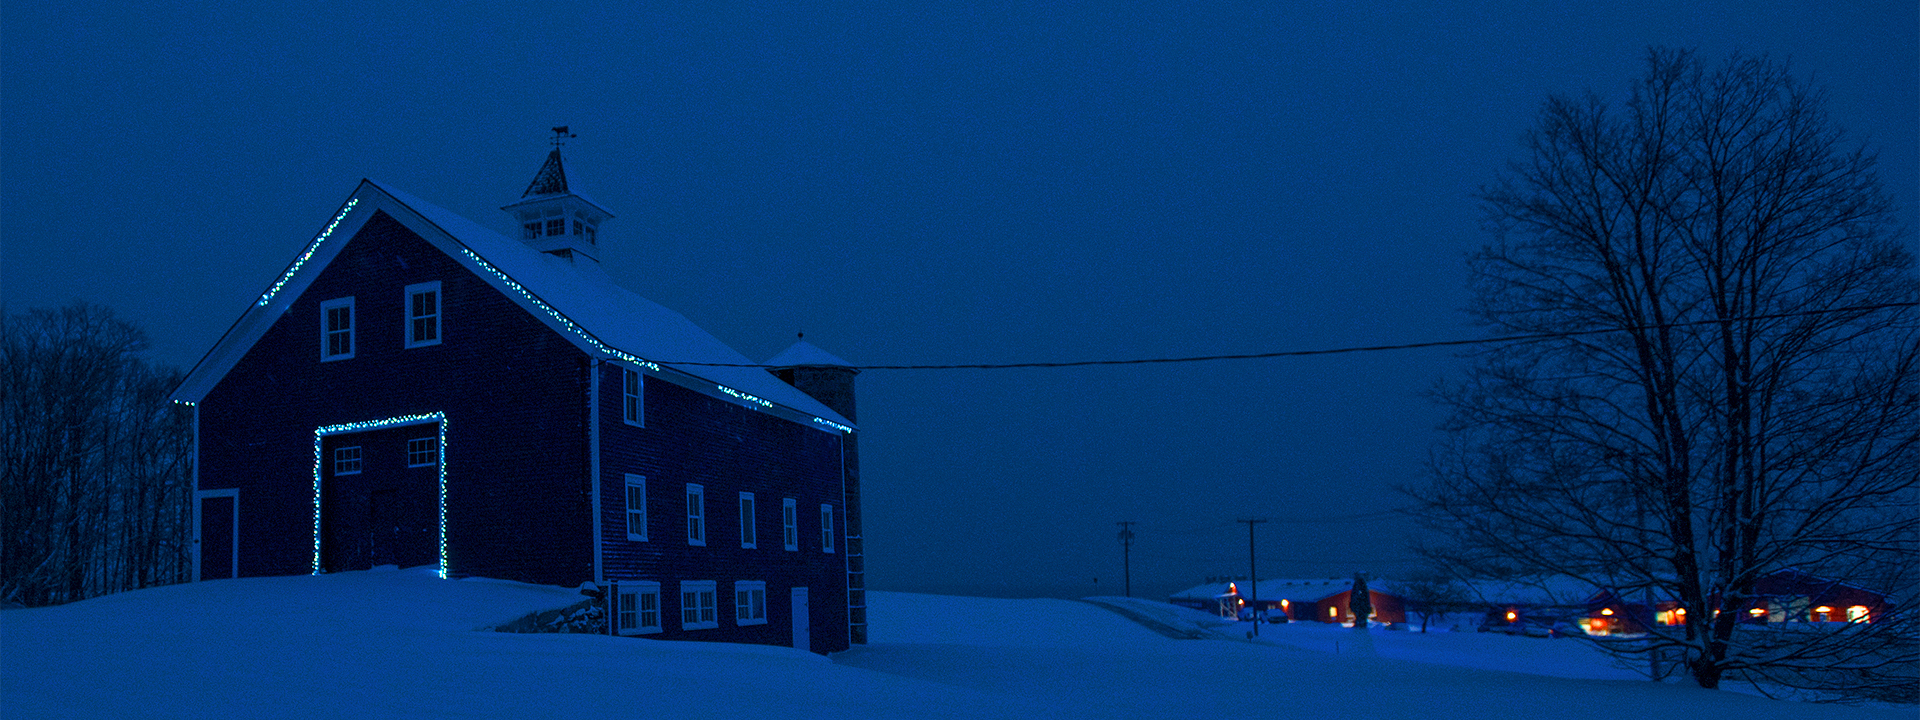 snow barn at night